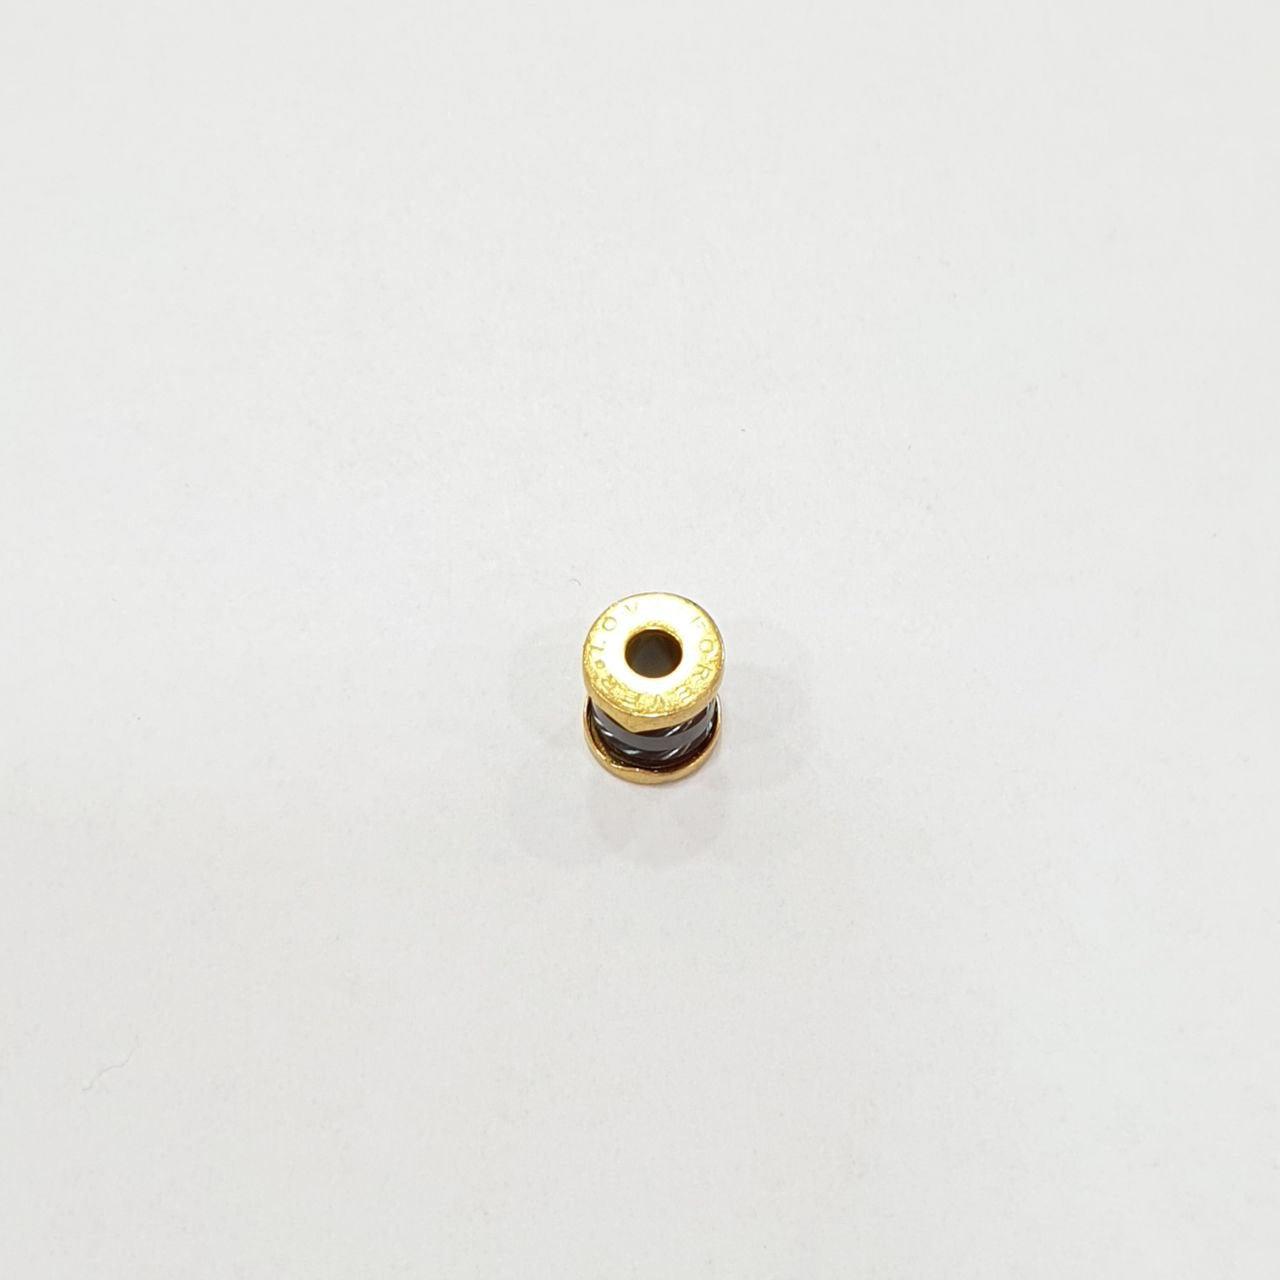 22k / 916 Gold B Design Charm / Pendant-Best Gold Shop